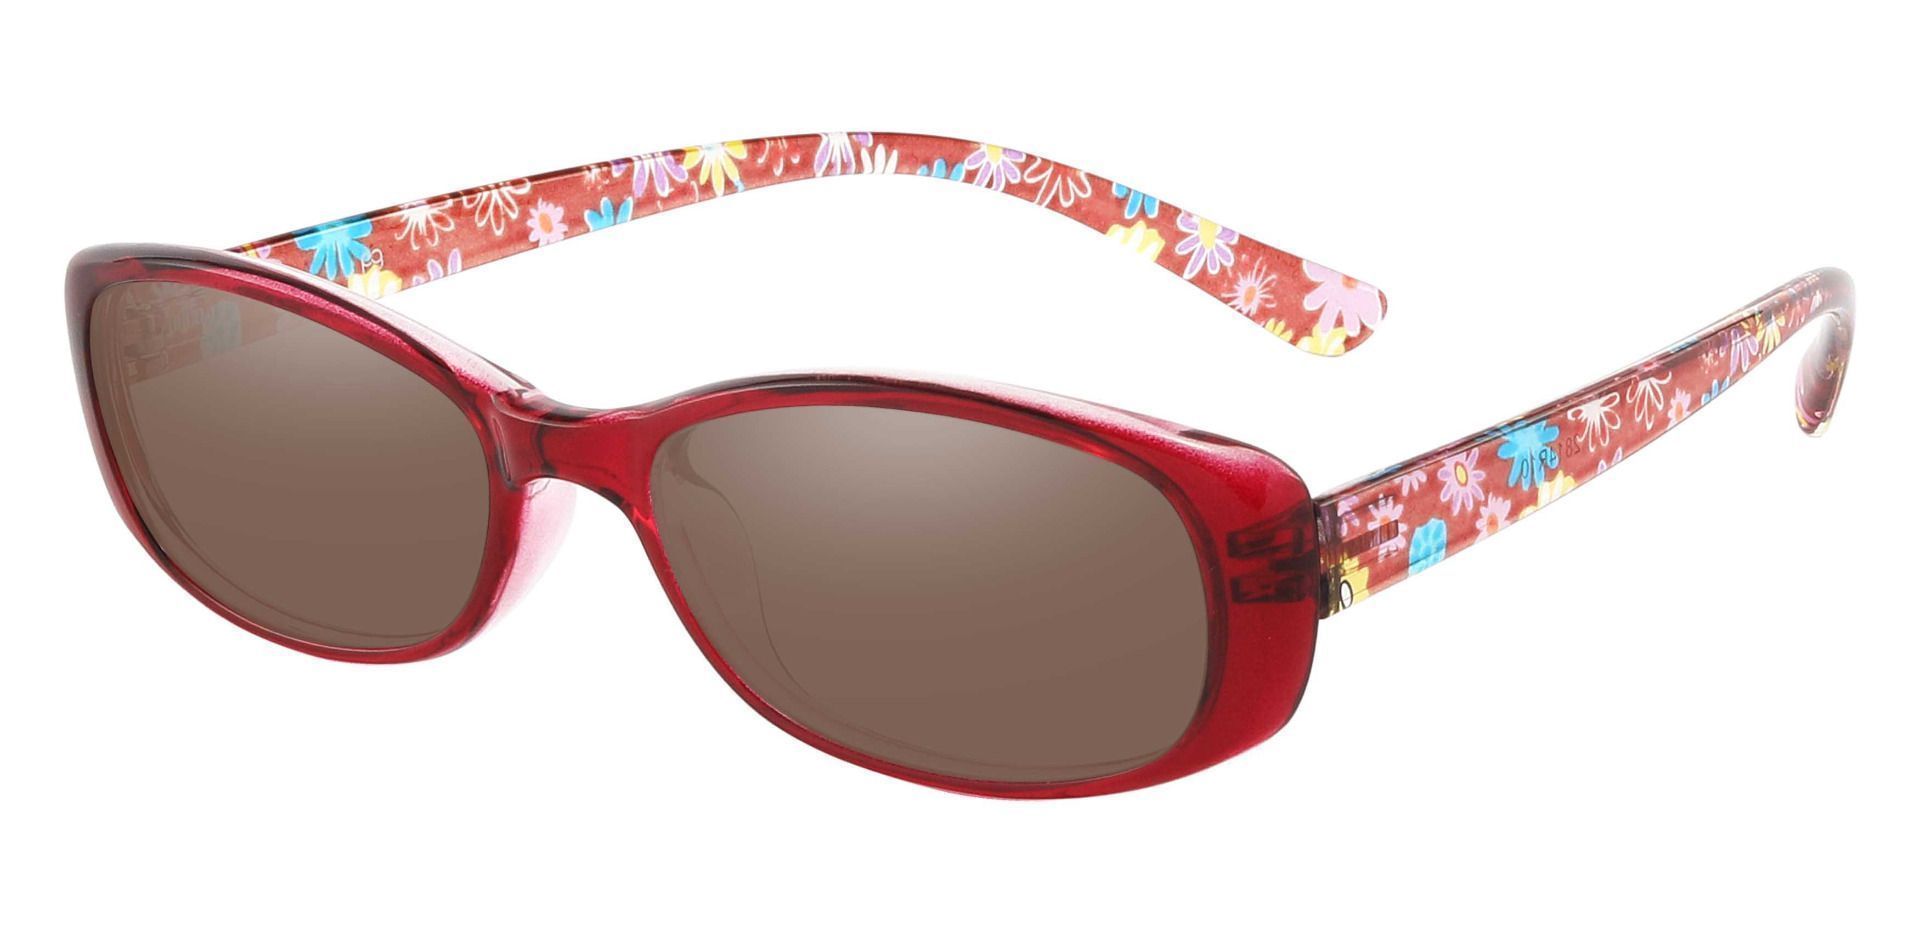 Bethesda Rectangle Progressive Sunglasses - Red Frame With Brown Lenses